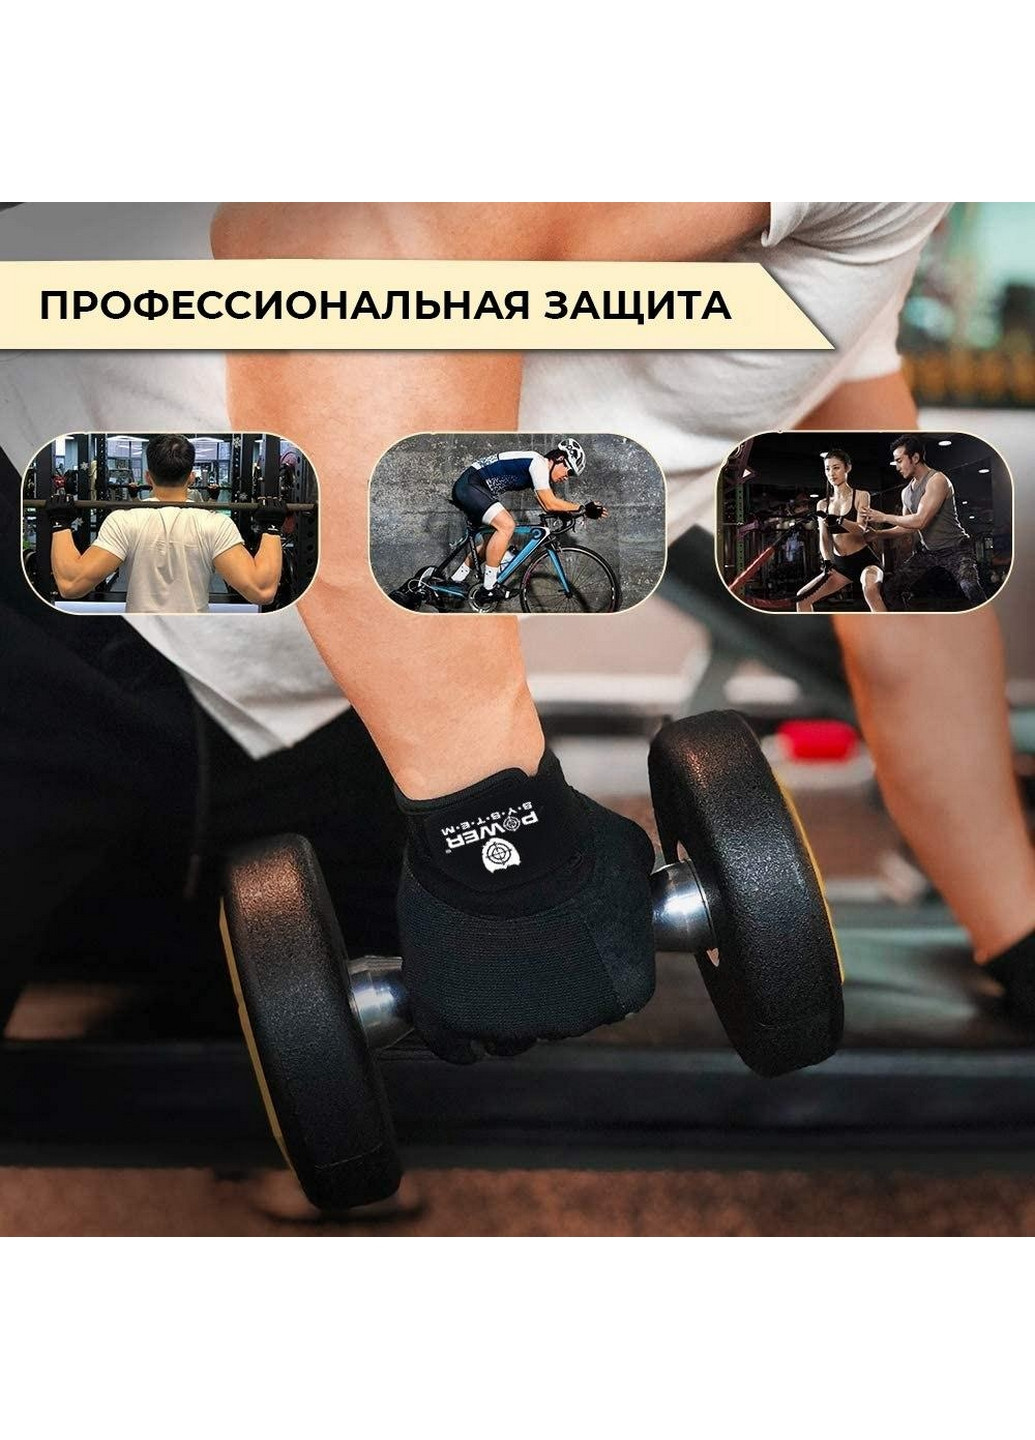 Перчатки для фитнеса S Power System (260497703)